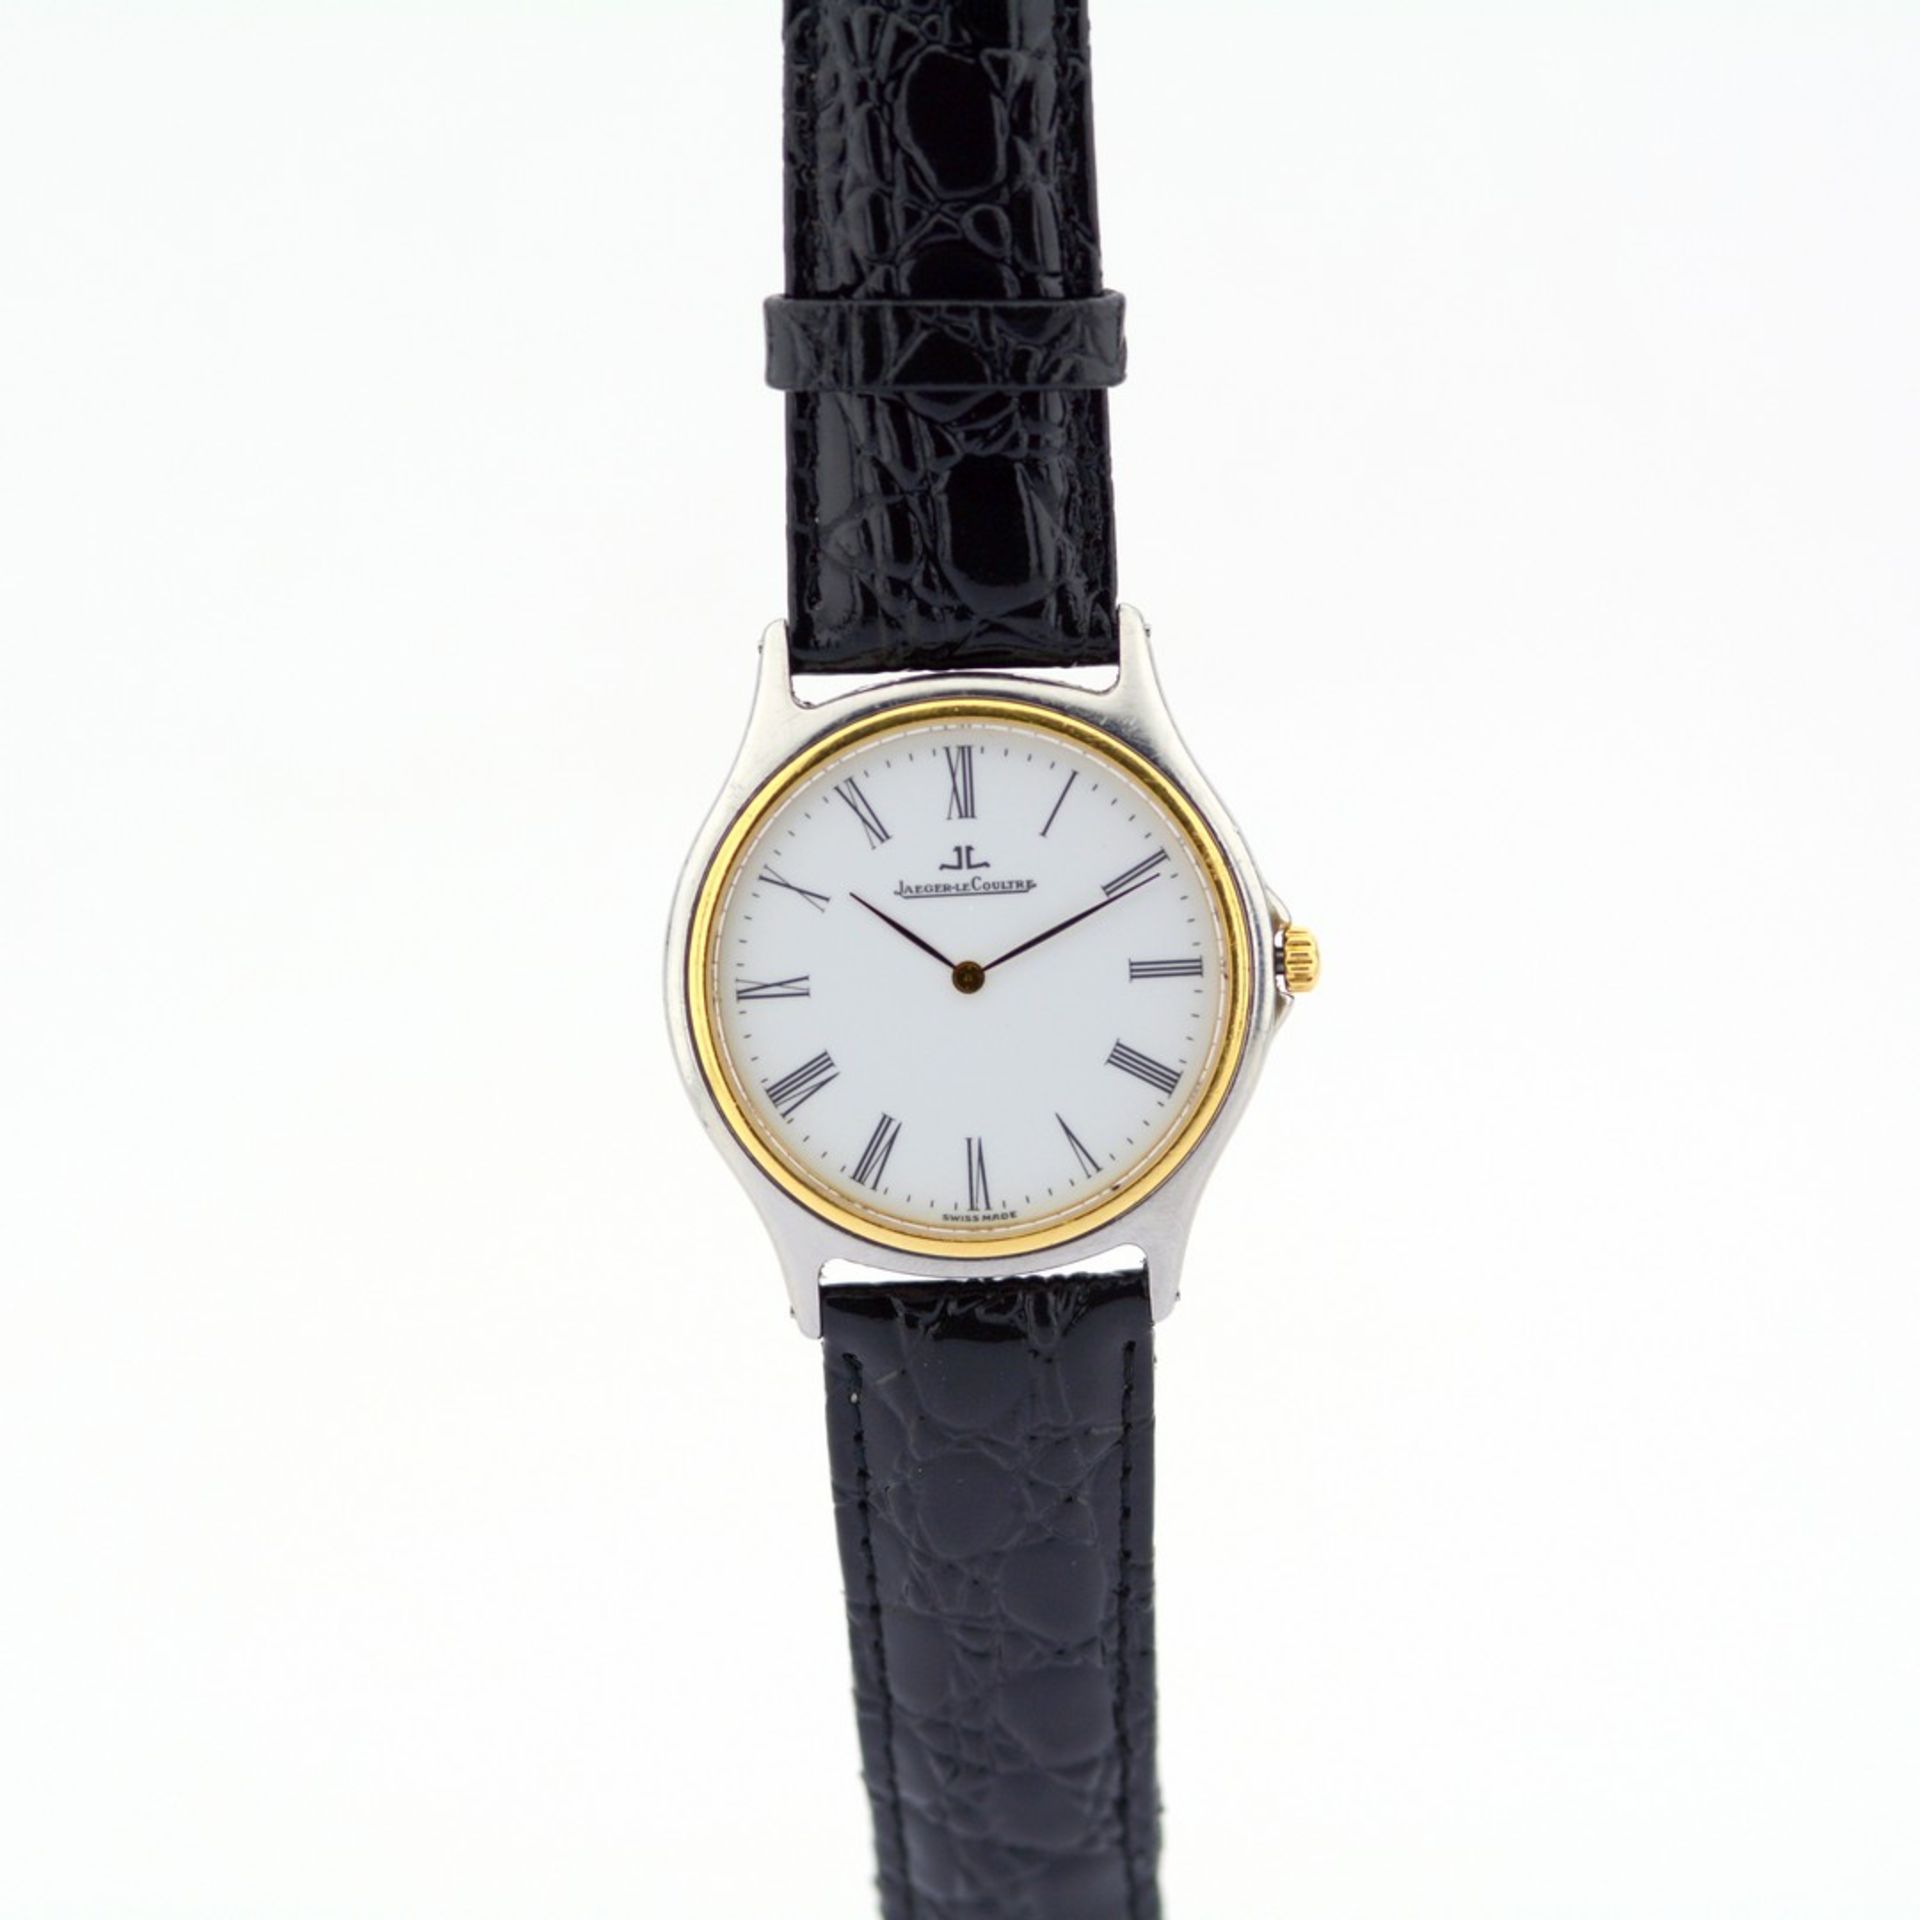 Jaeger / Heraion - Gentlmen's Gold/Steel Wrist Watch - Image 9 of 10